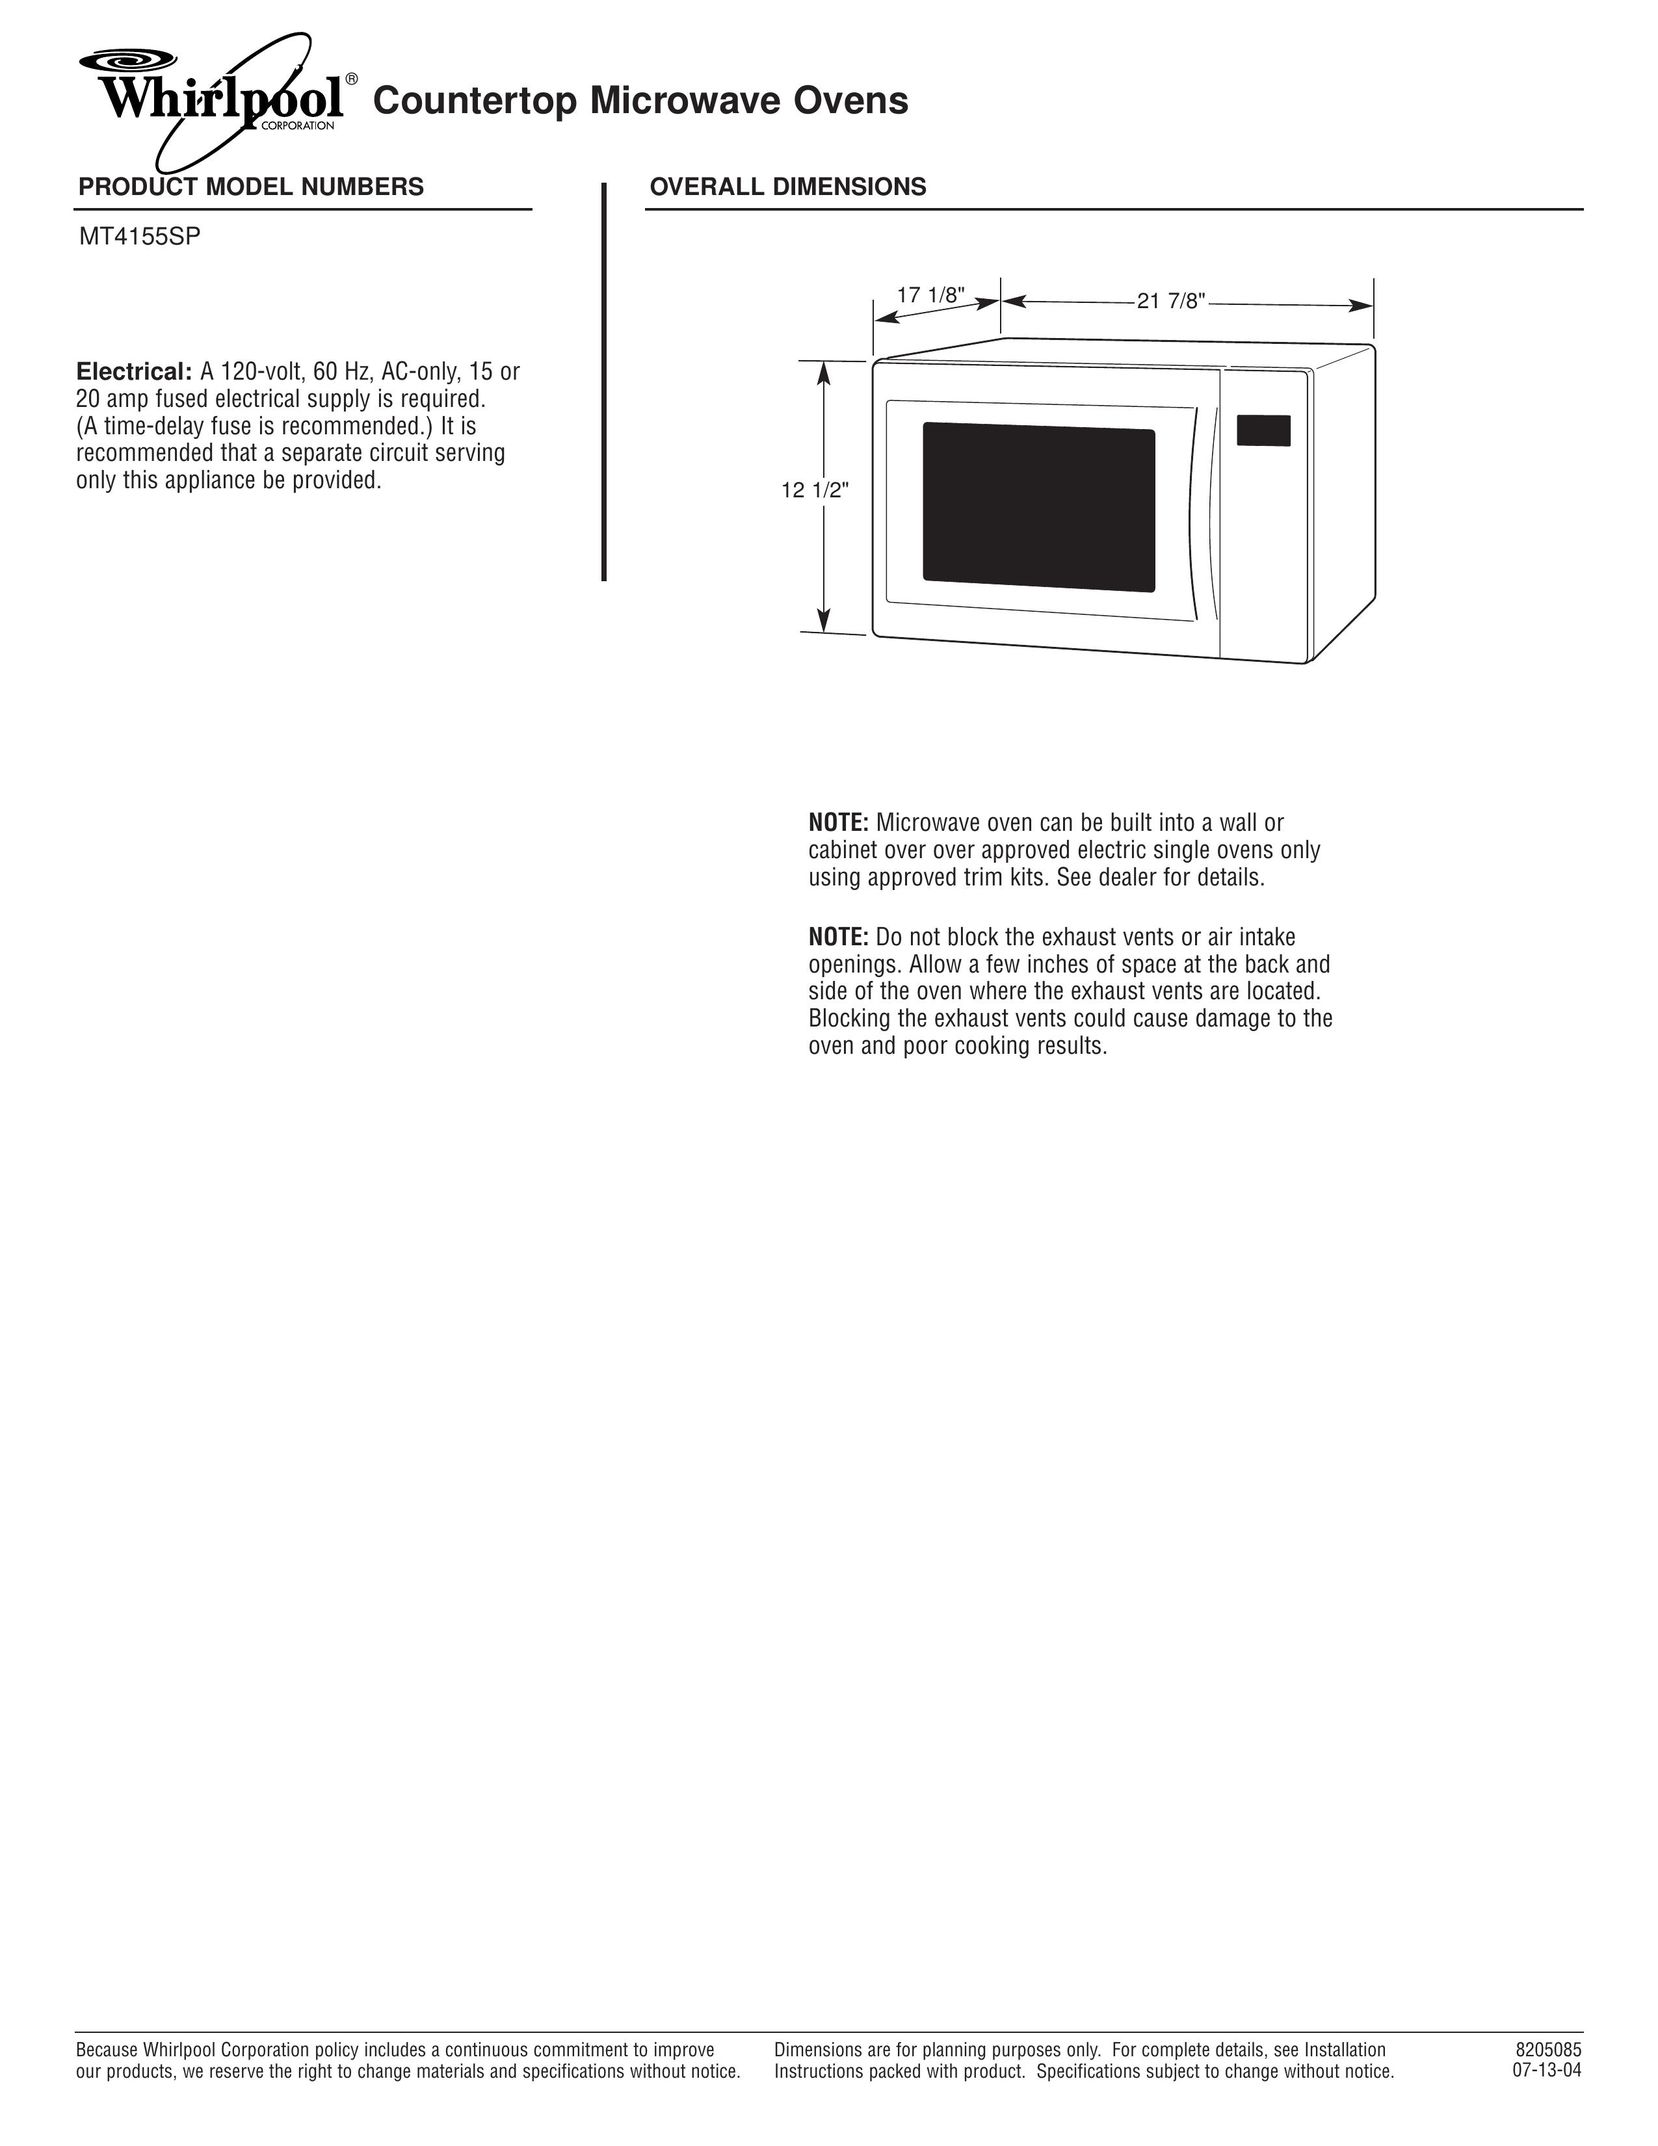 Whirlpool 8205085 Microwave Oven User Manual